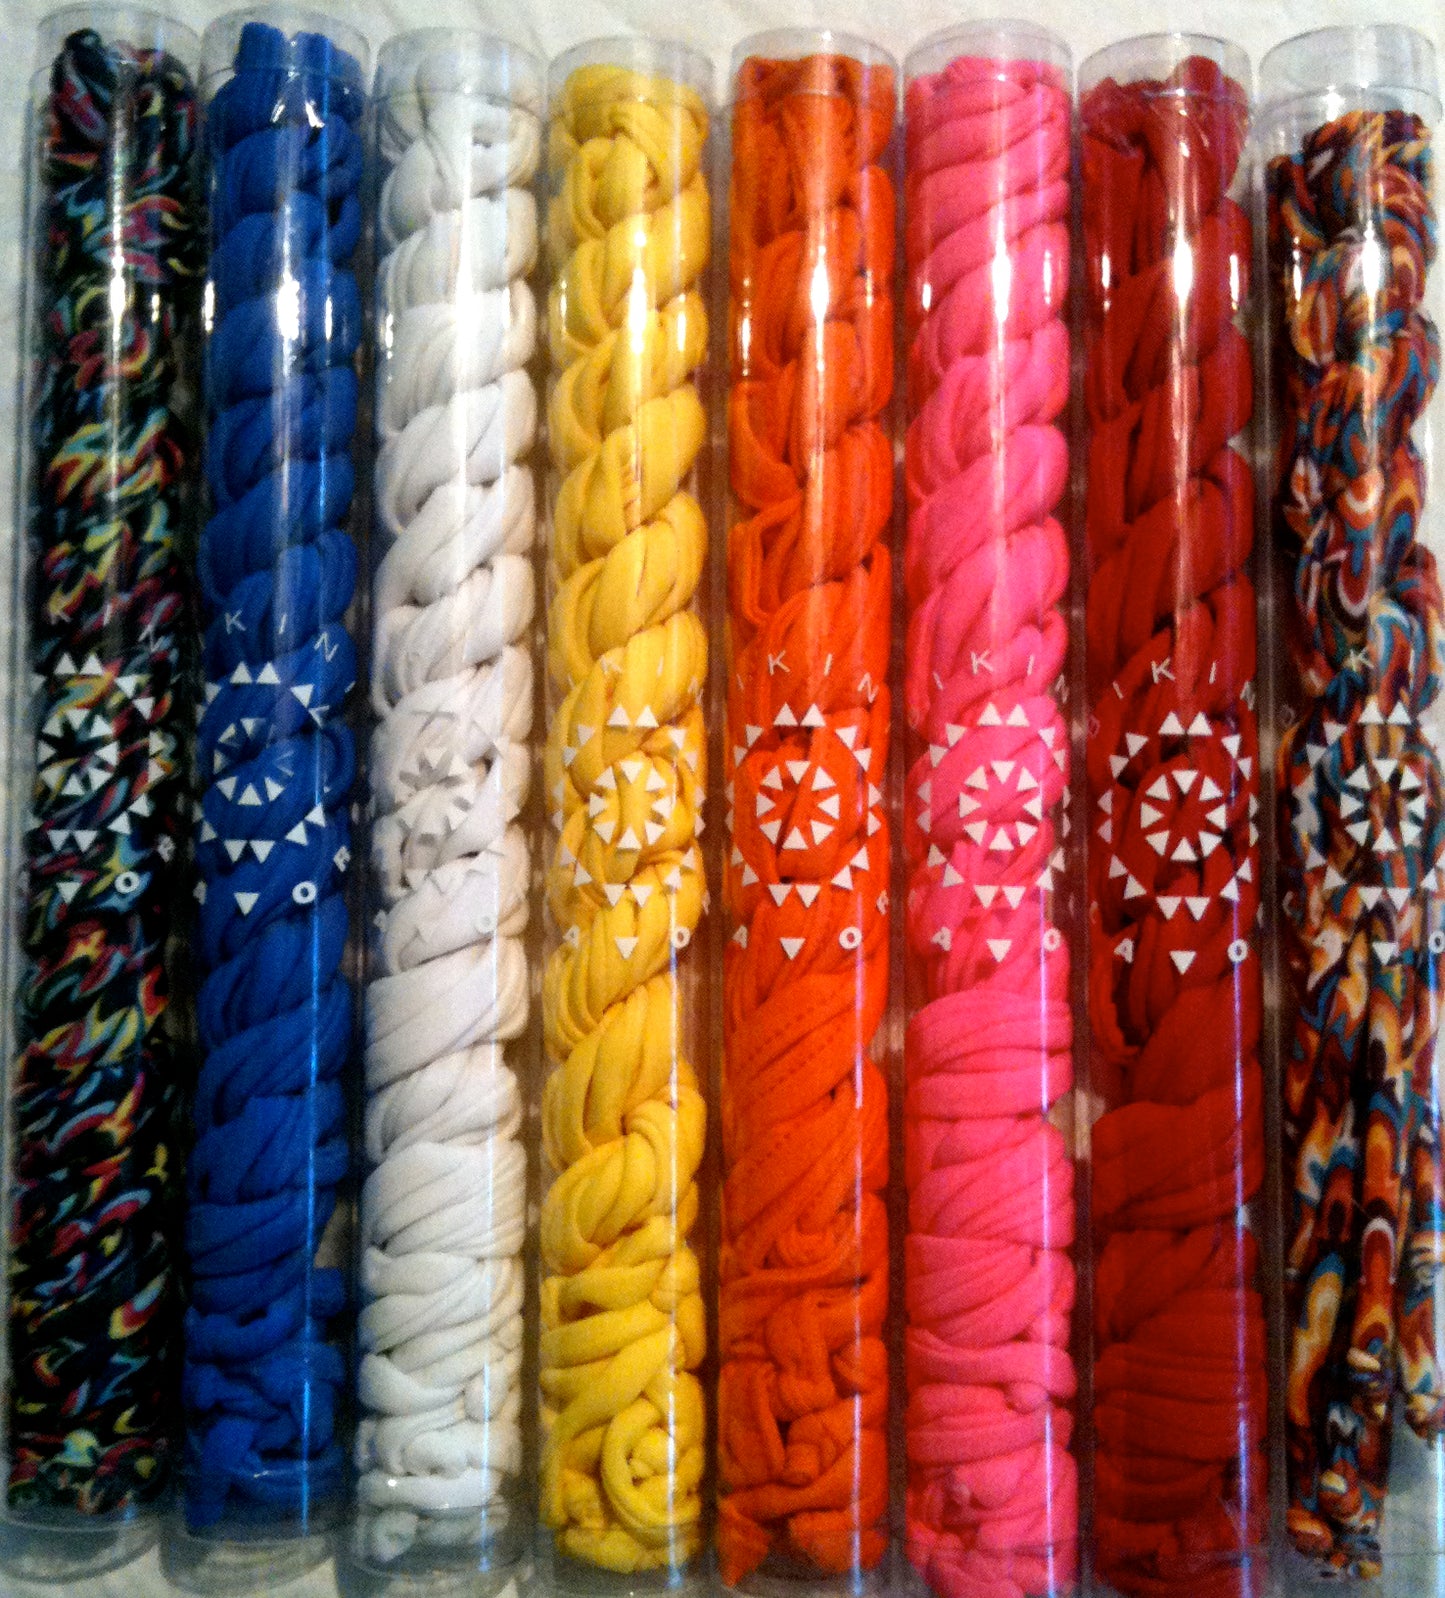 Bikini Flavors Spaghetti Strings in assorted colors